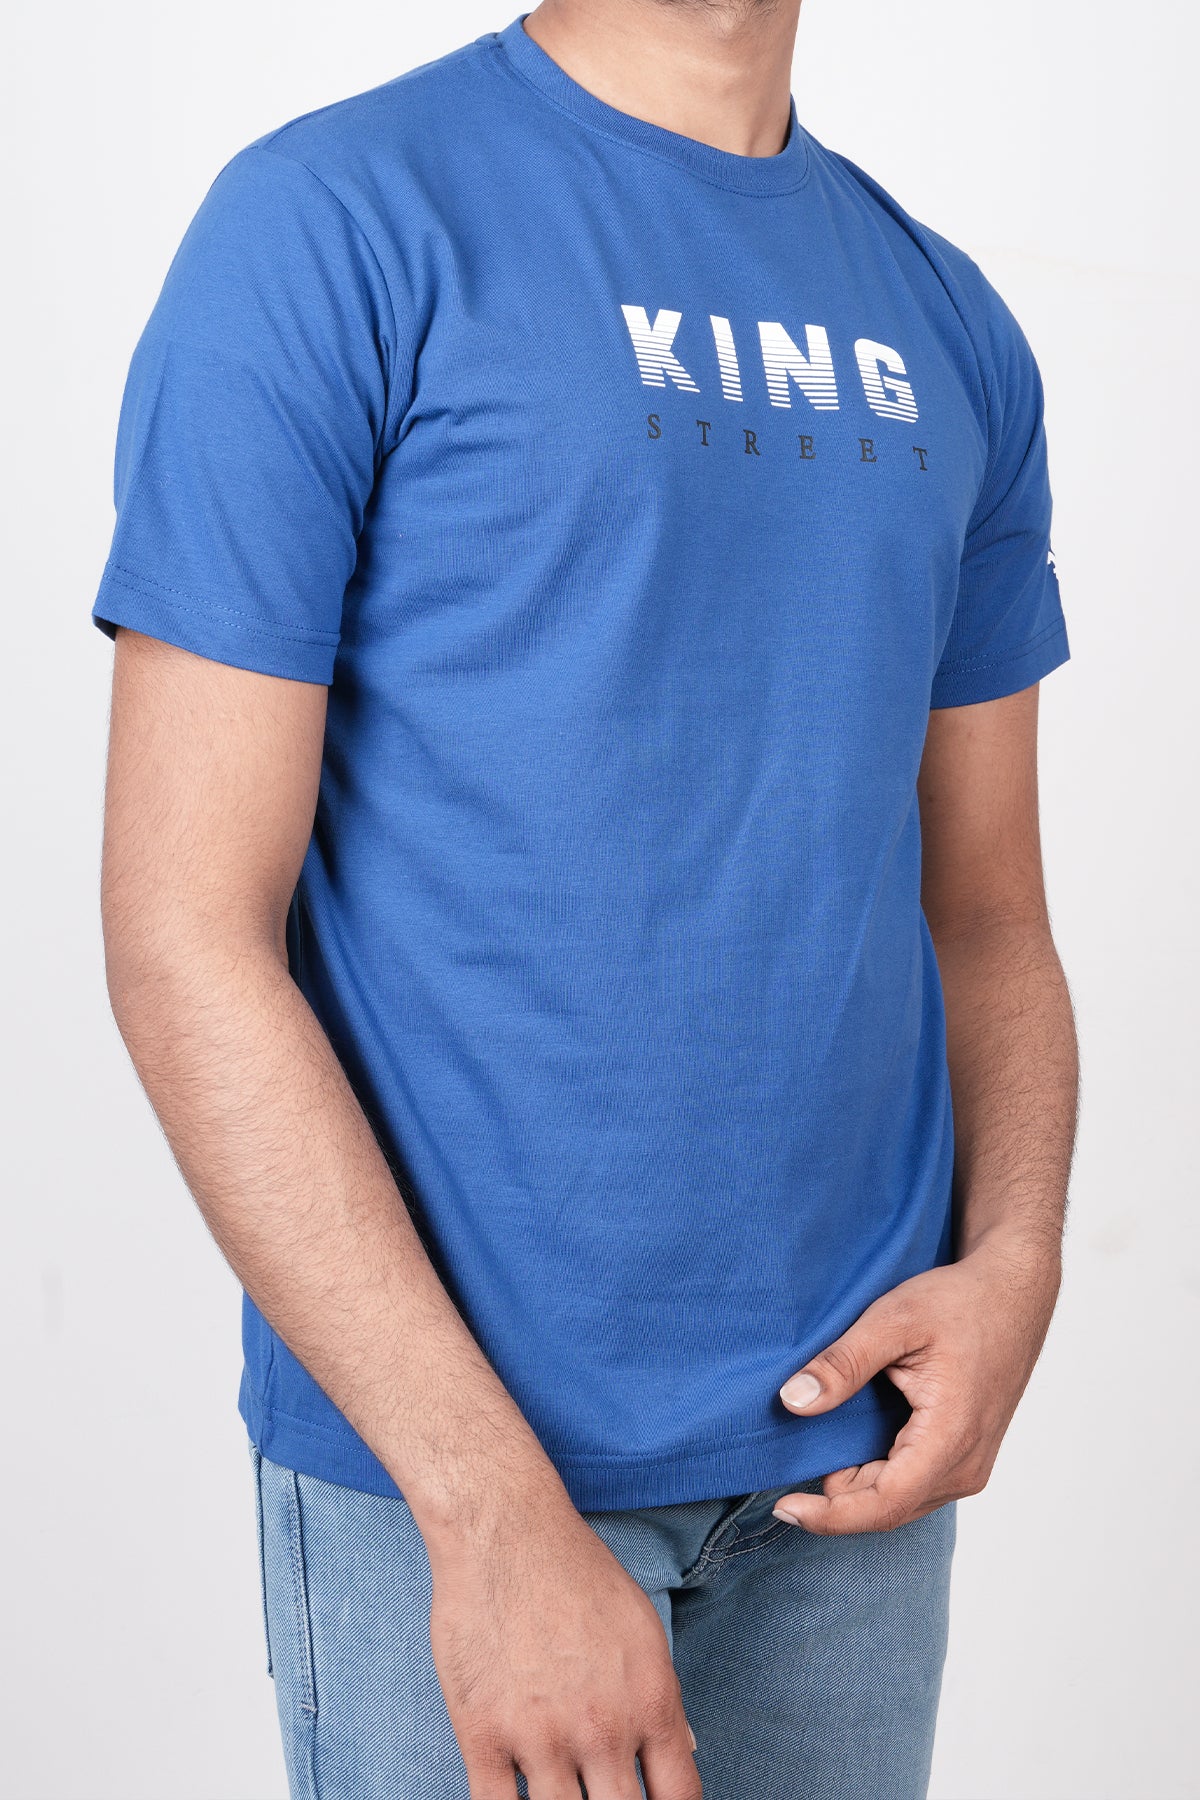 King Street Men's Casual T-Shirt